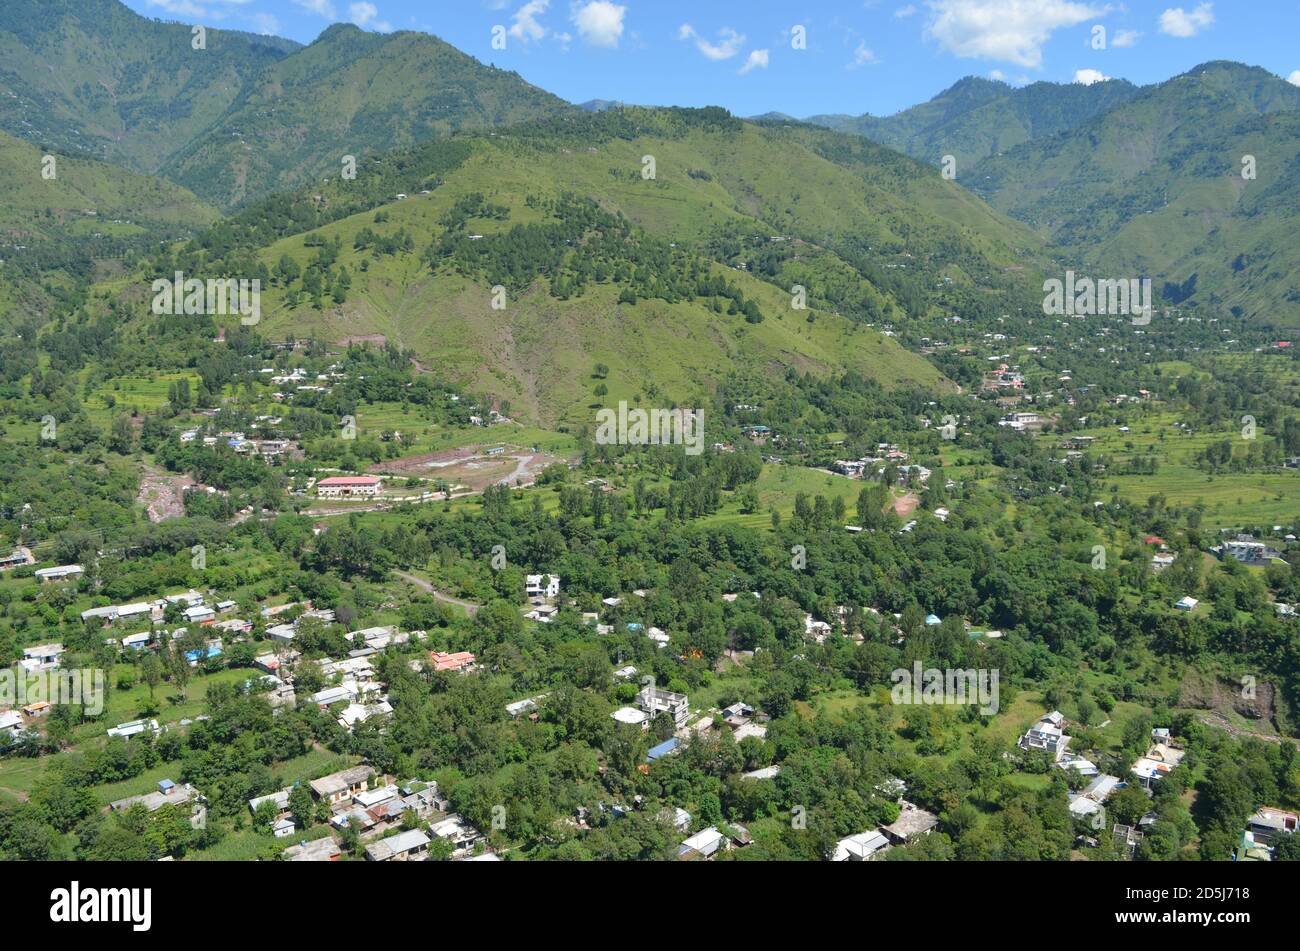 Aerial view of small buildings located on hills of Muzaffarabad, Pakistan Stock Photo